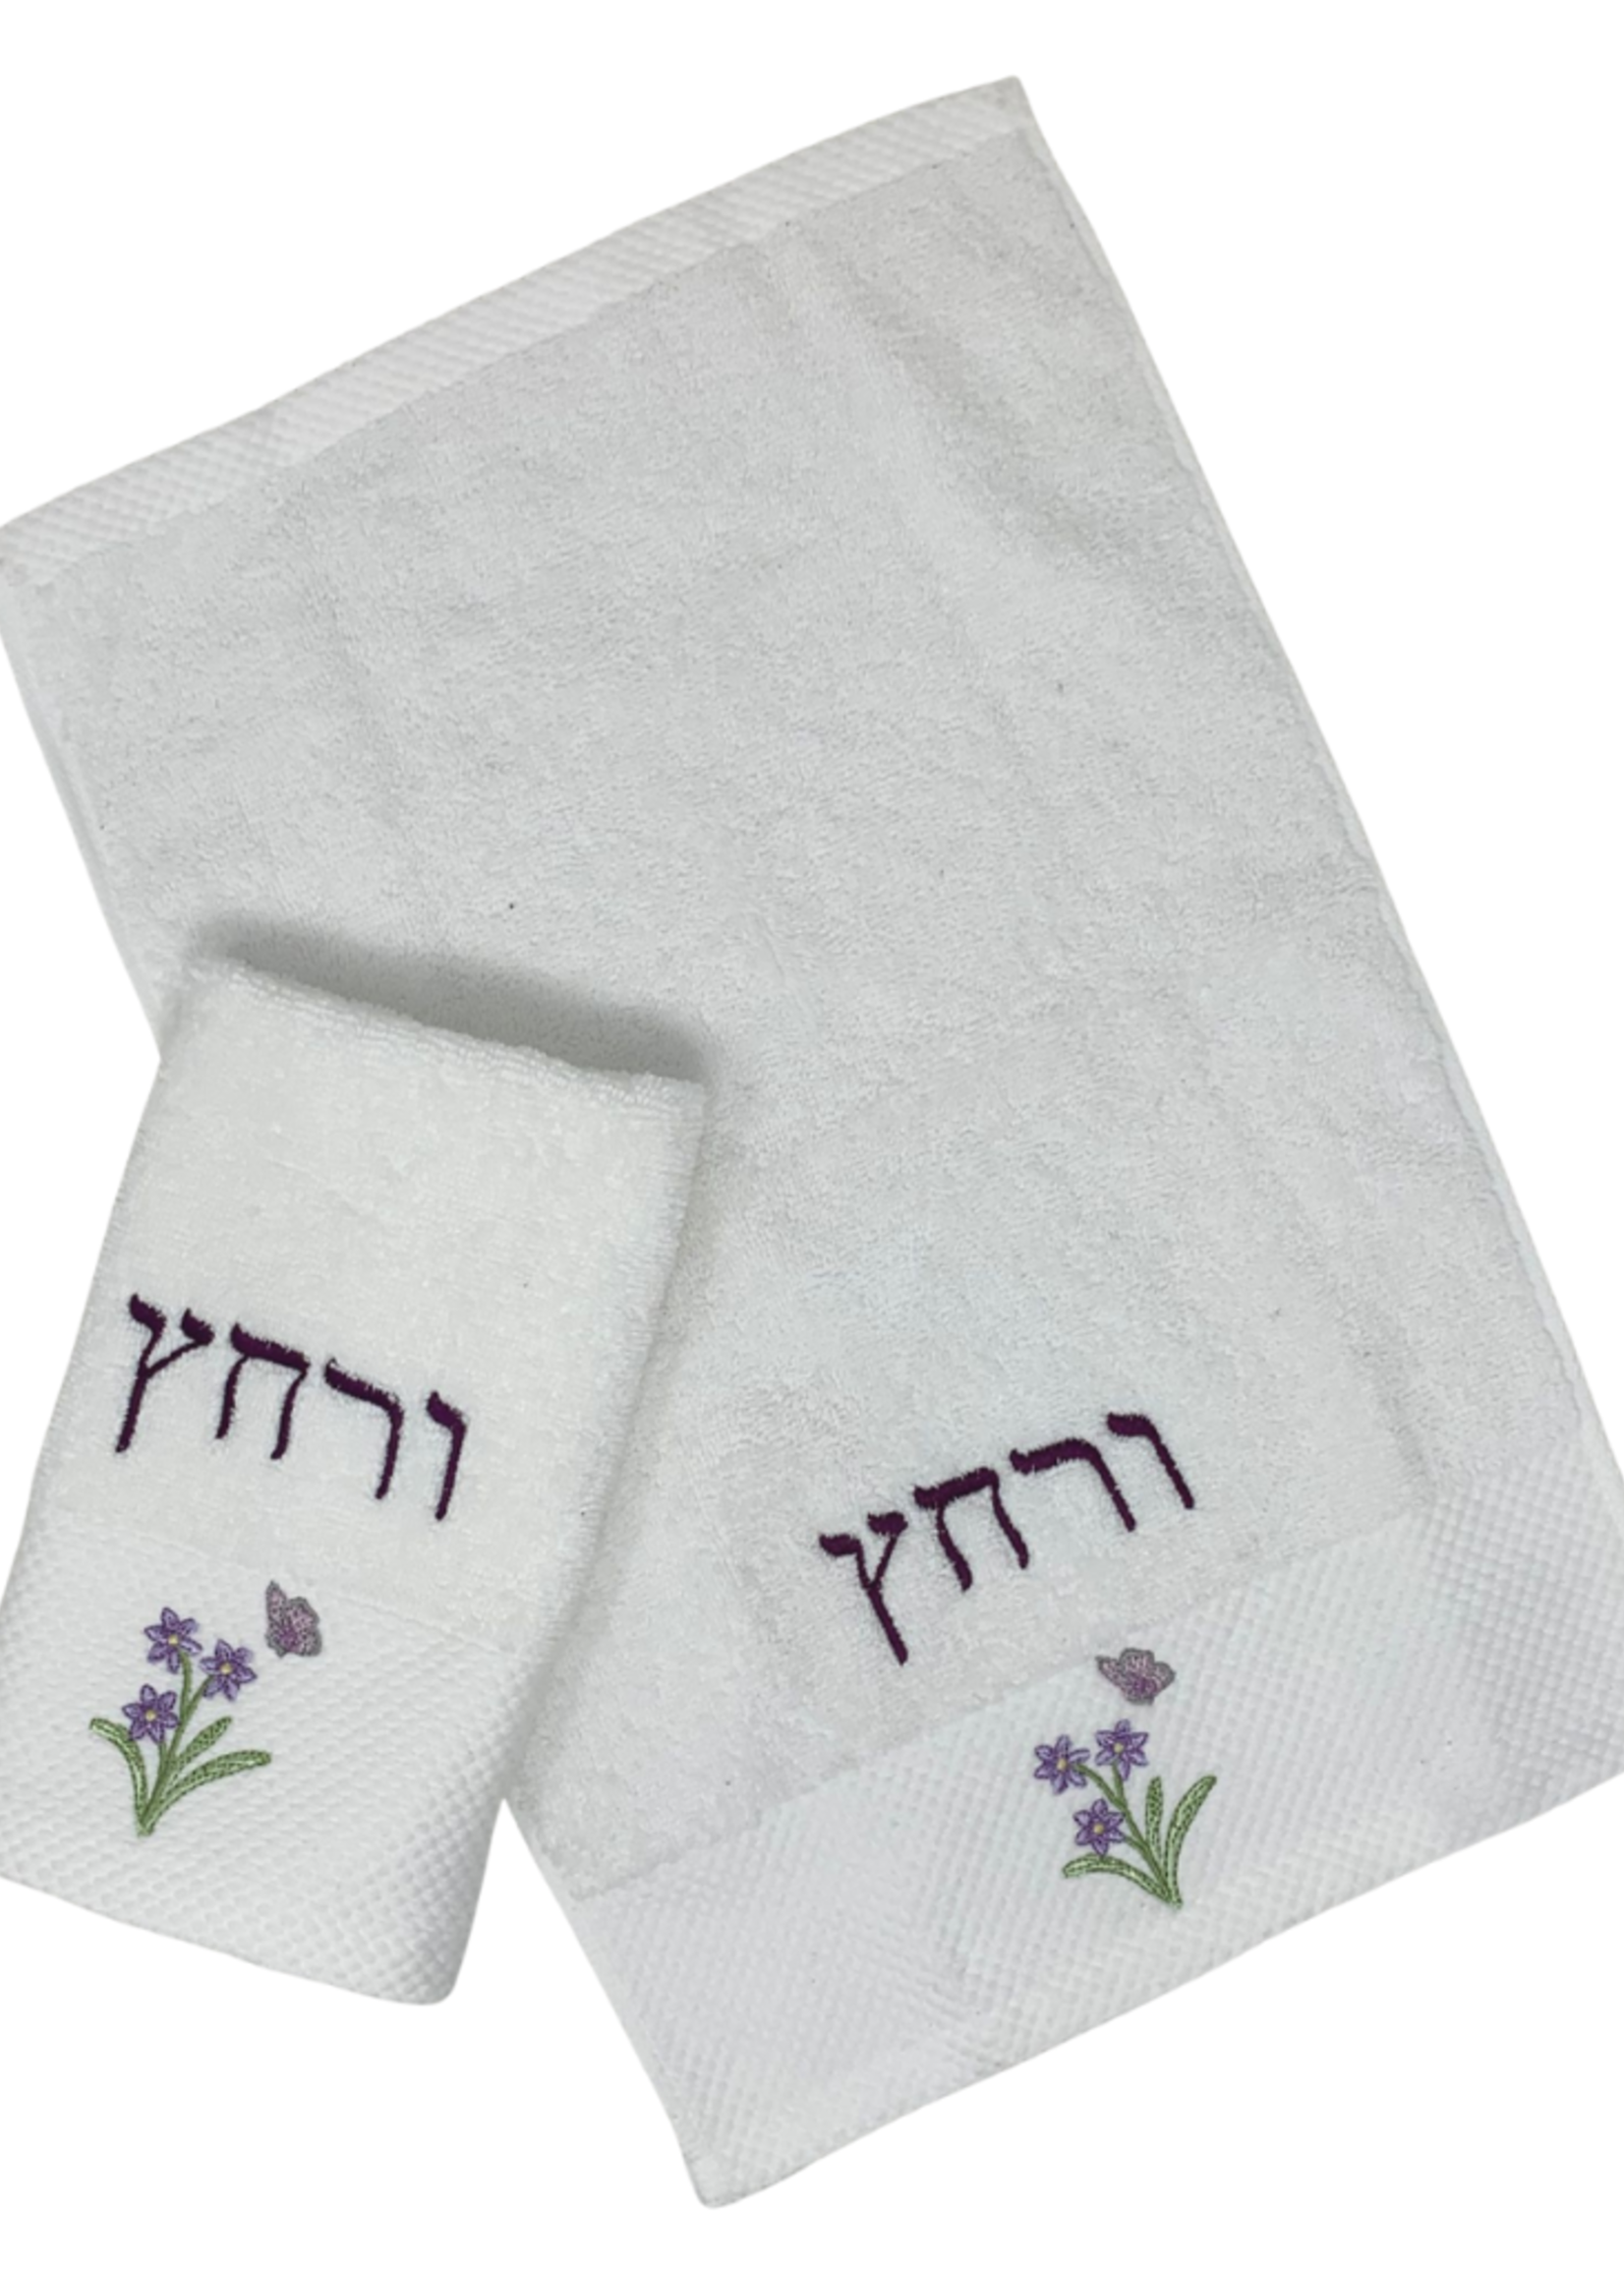 Urchatz Towel Sets (Assorted Designs)